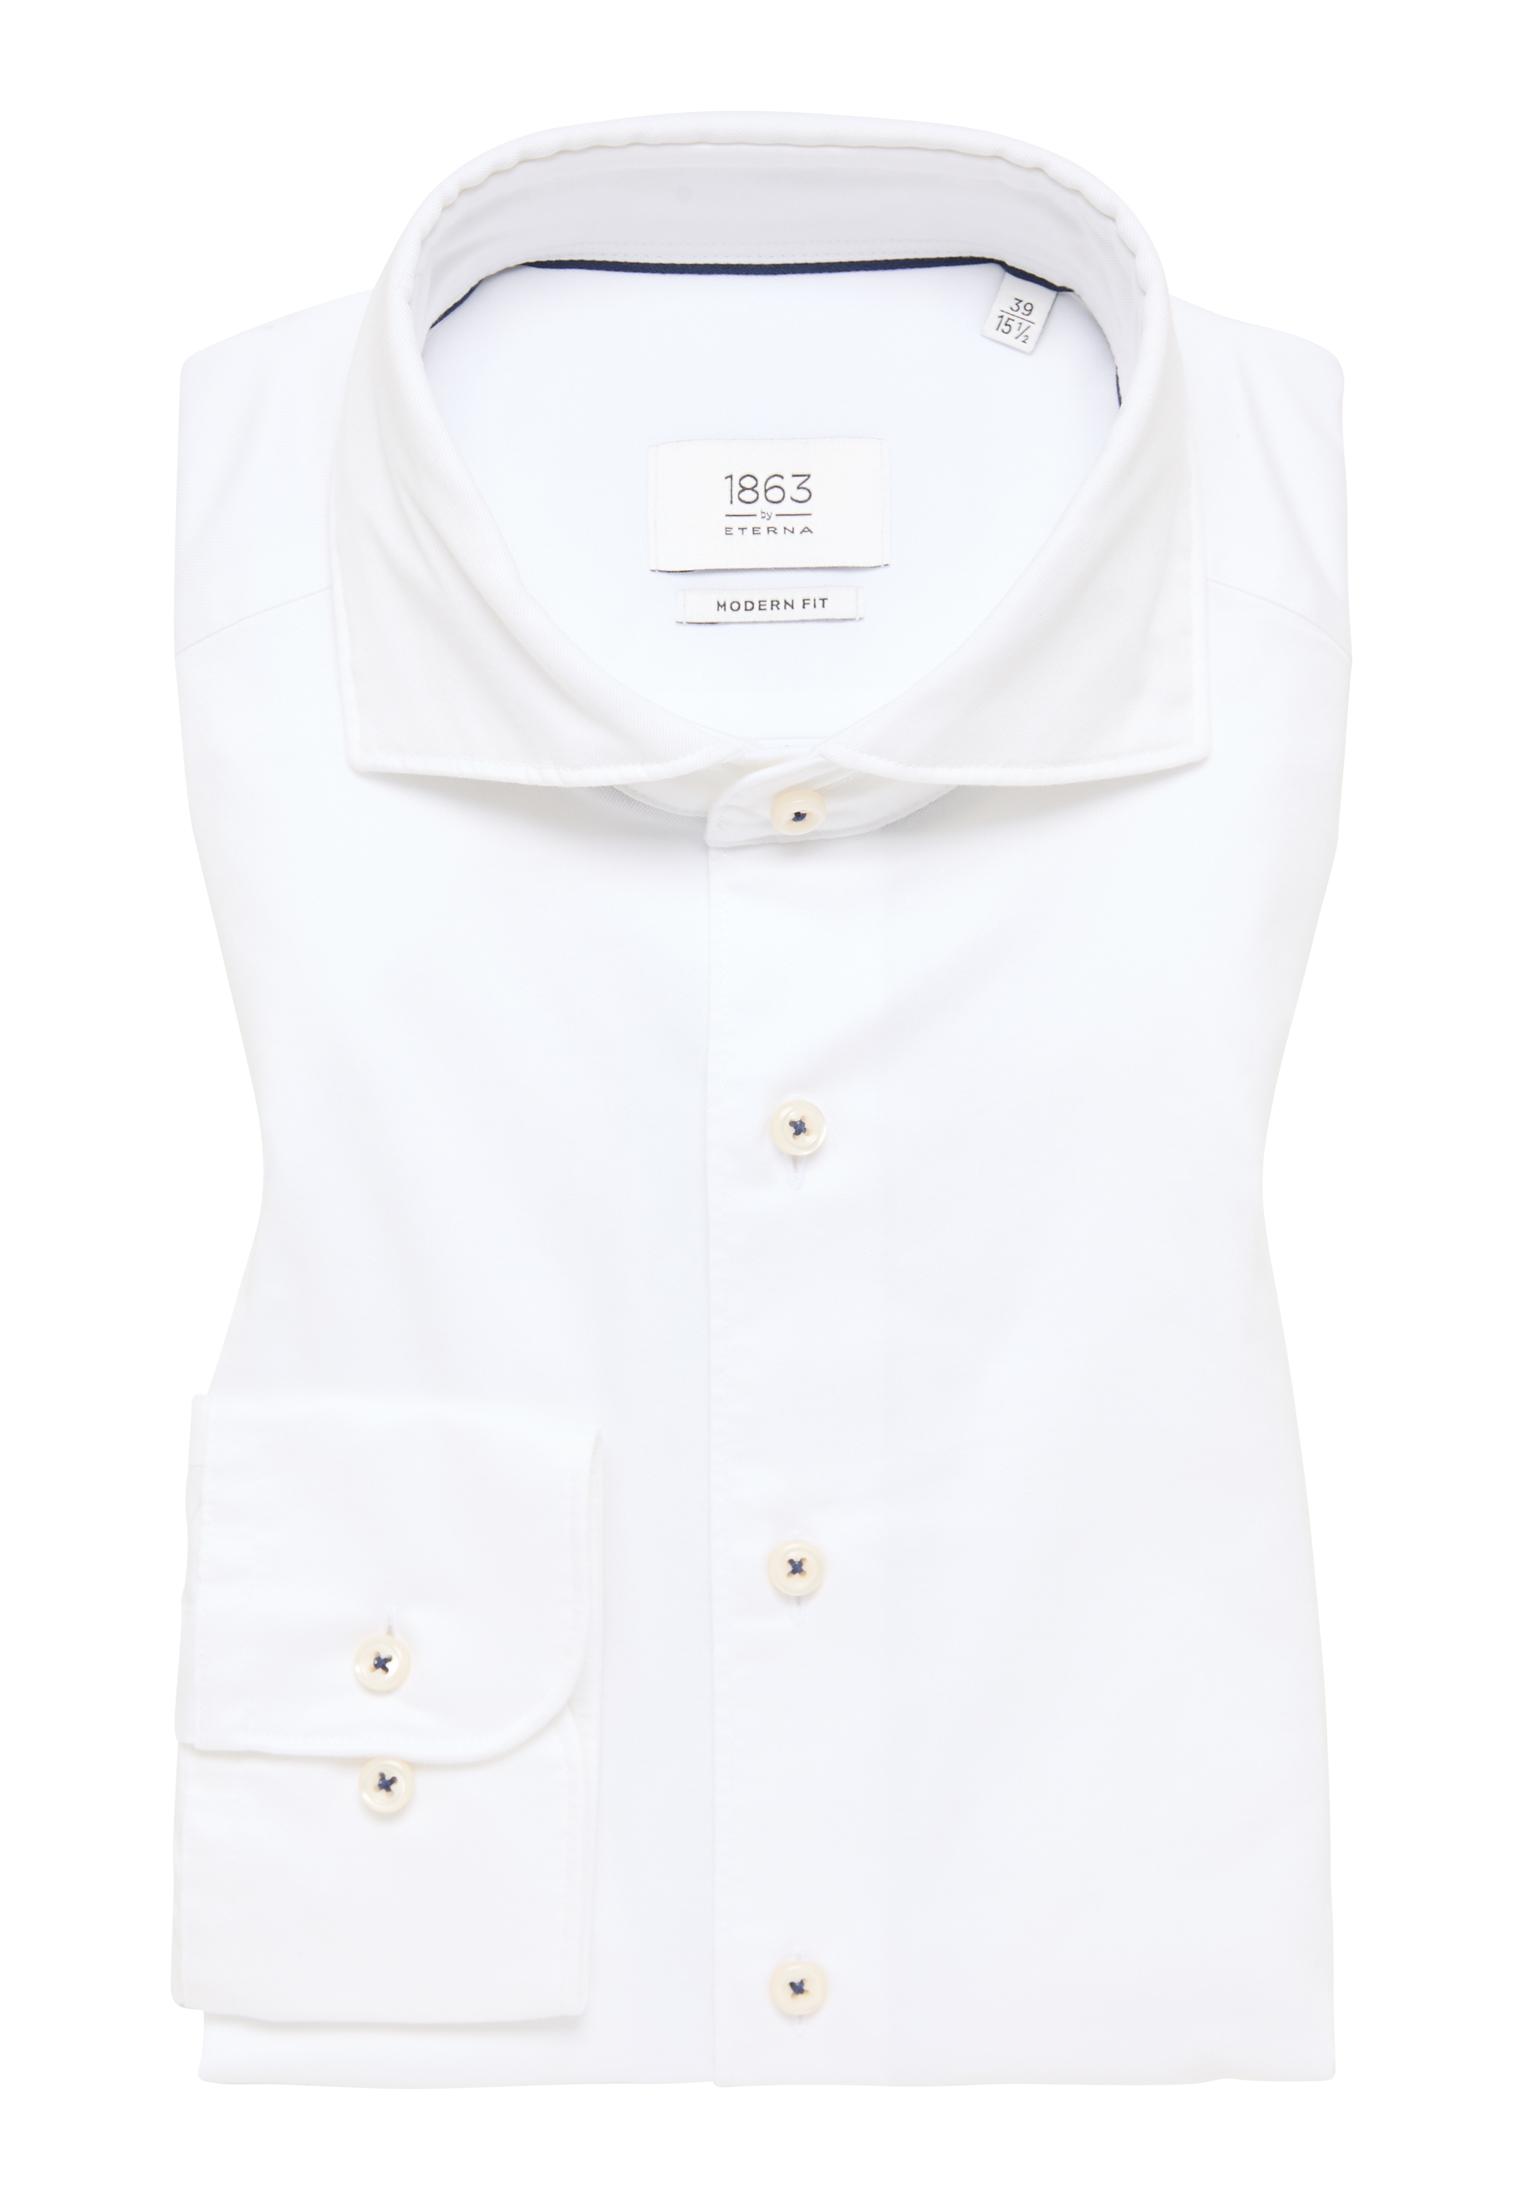 unifarben Soft MODERN Shirt off-white | FIT 43 | Luxury off-white 1SH03488-00-02-43-1/1 | in | Langarm